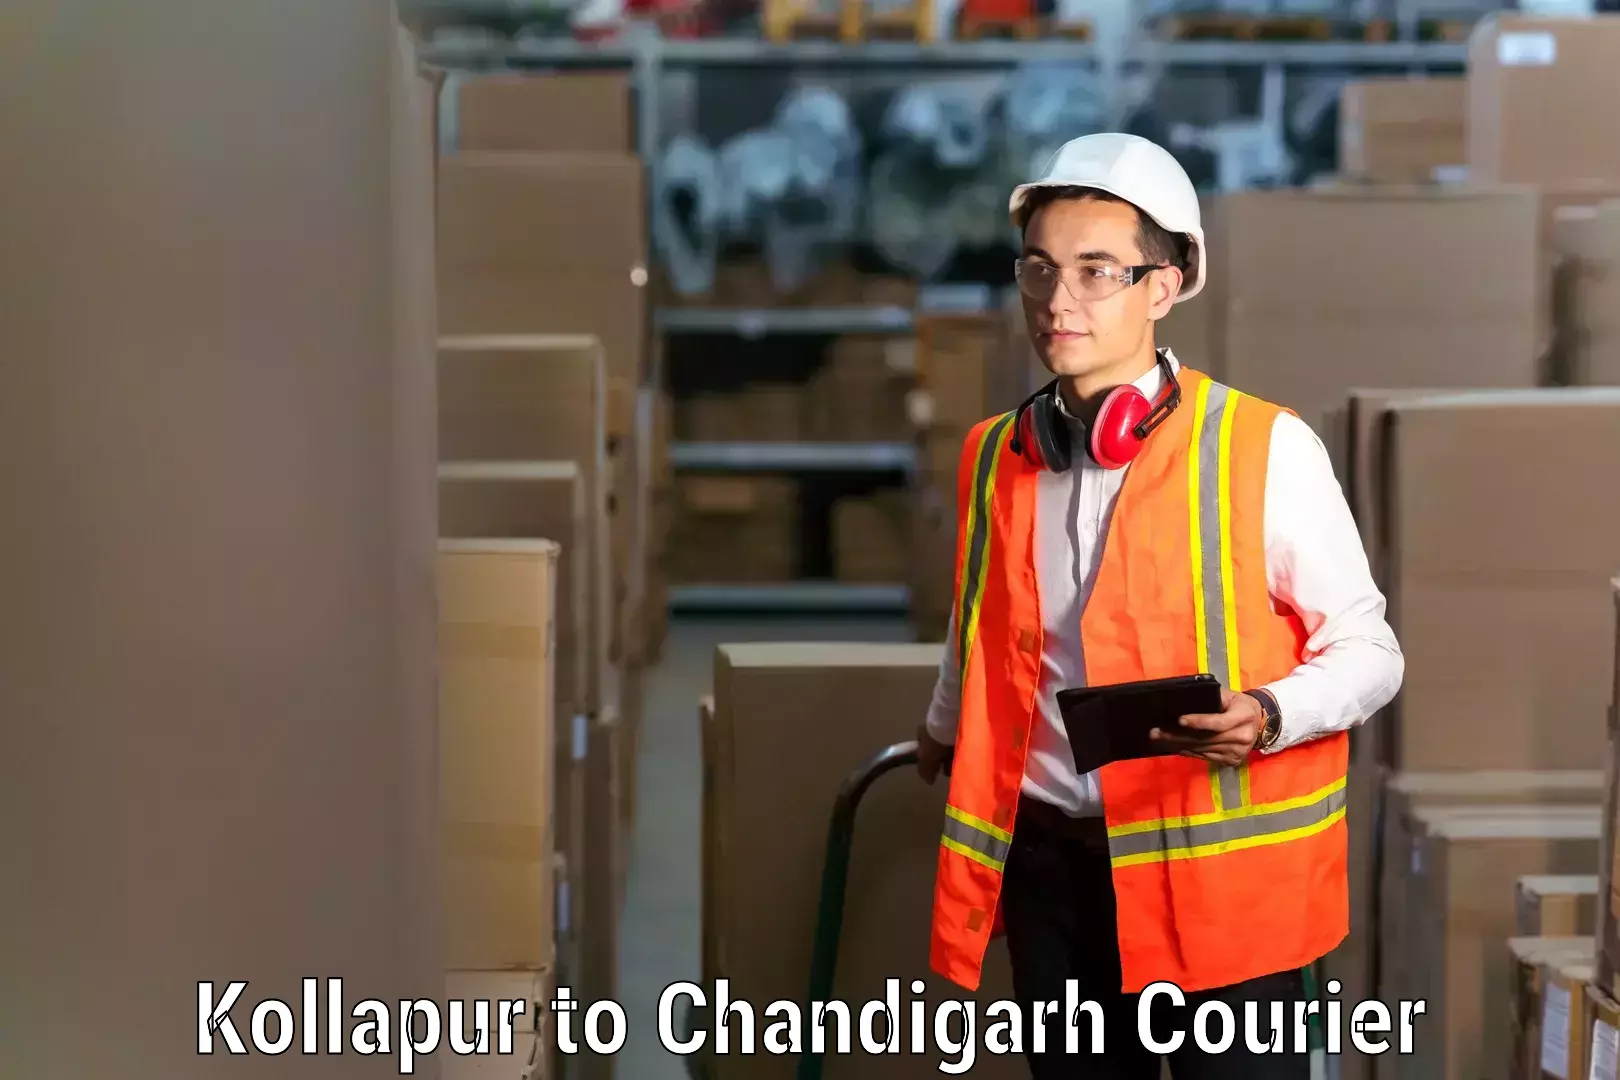 Furniture transport company Kollapur to Chandigarh